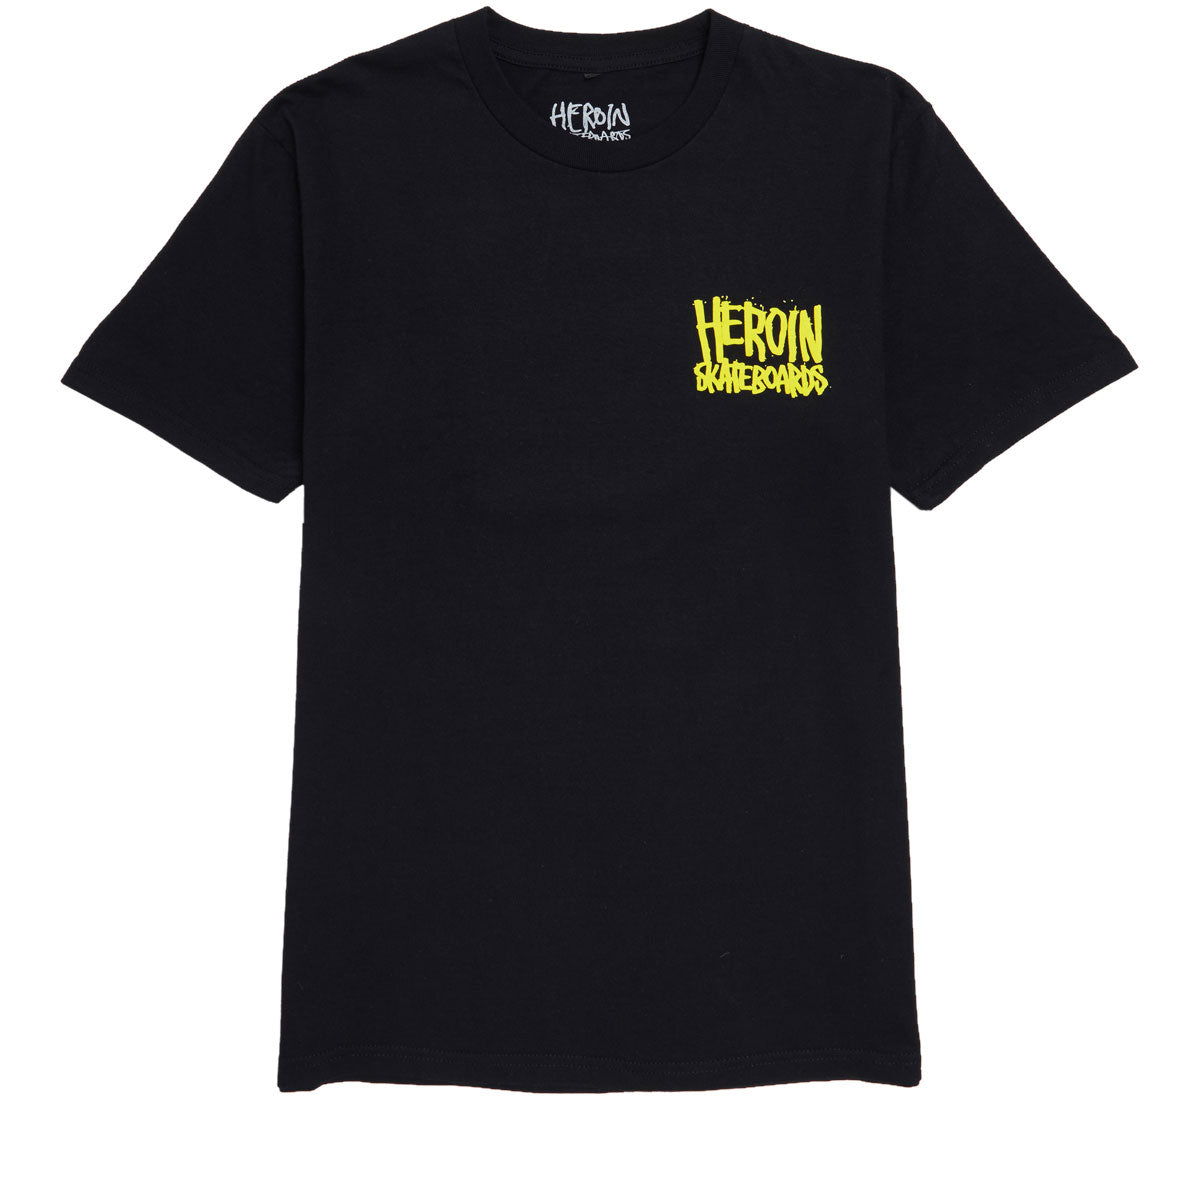 Heroin Teggxas Chainsaw T-Shirt - Black image 2